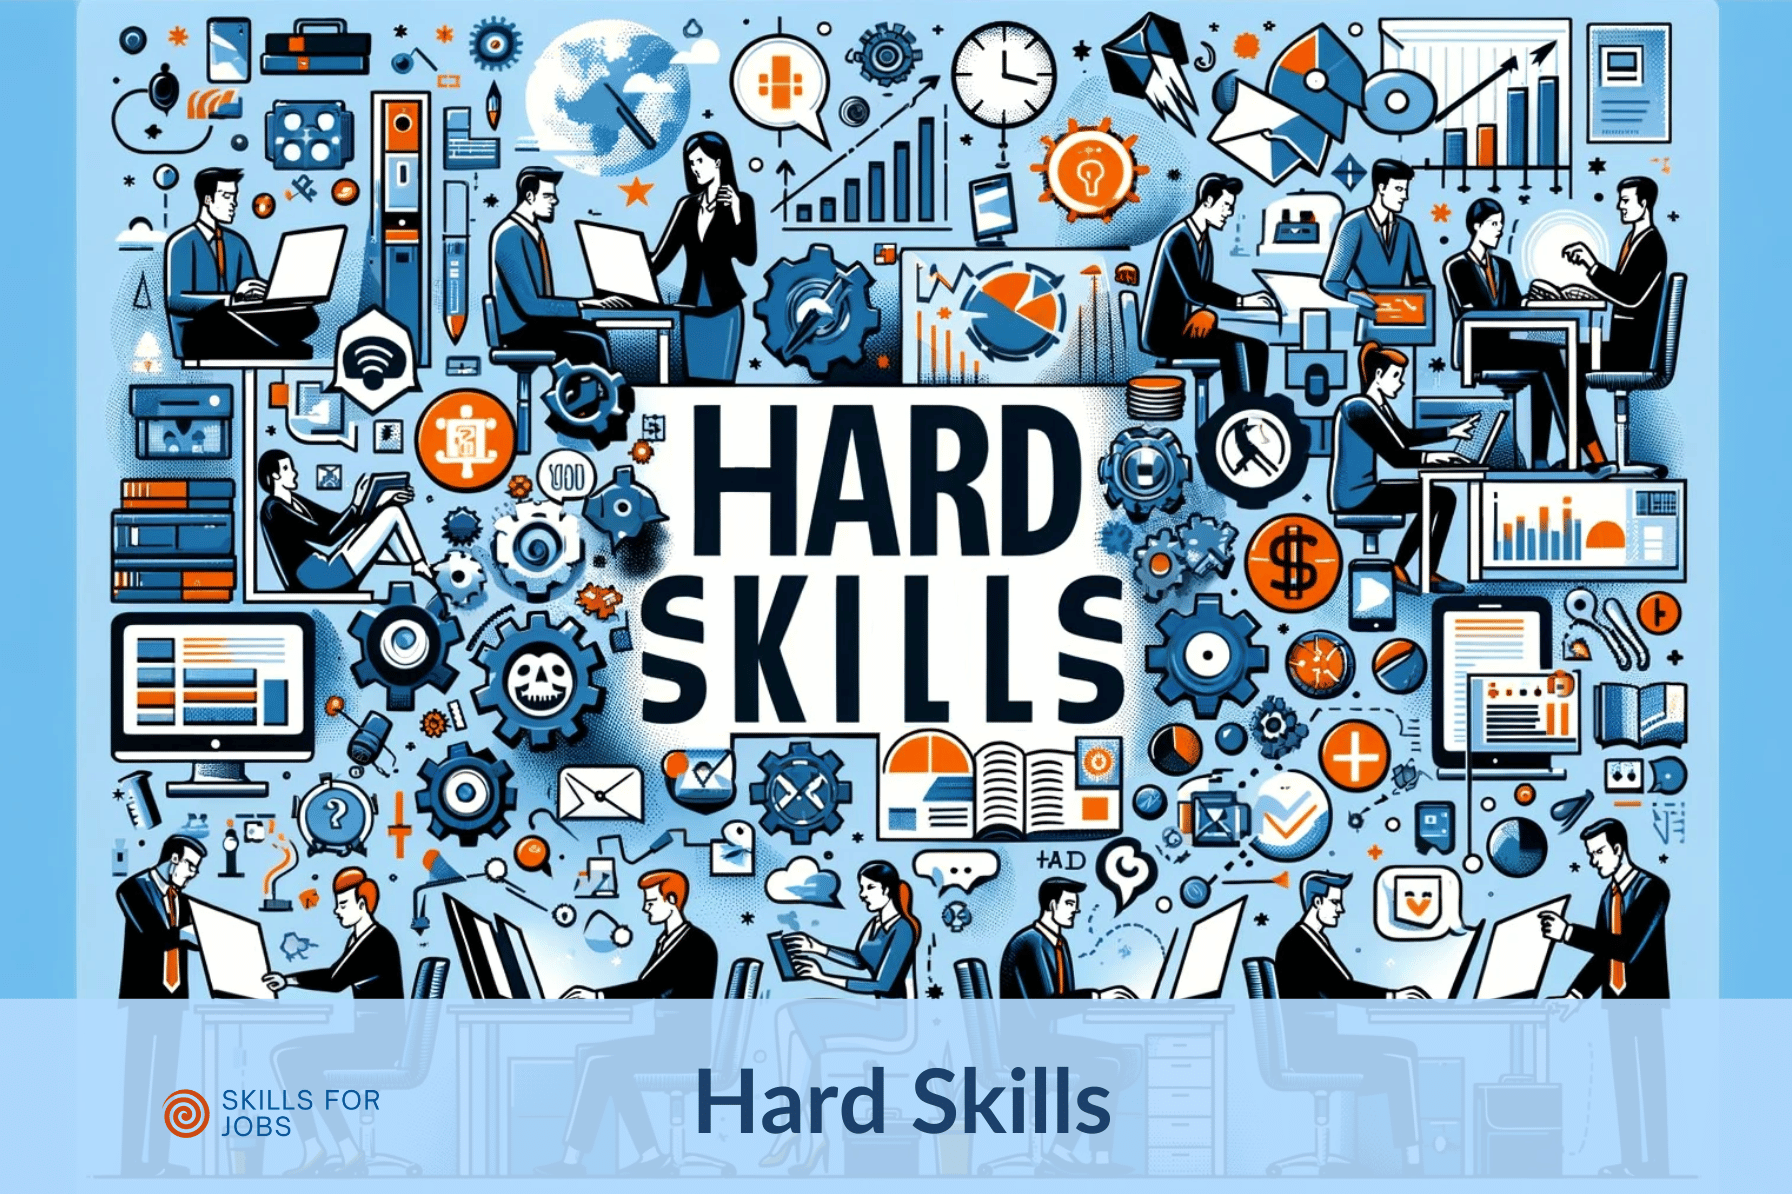 Hard Skills